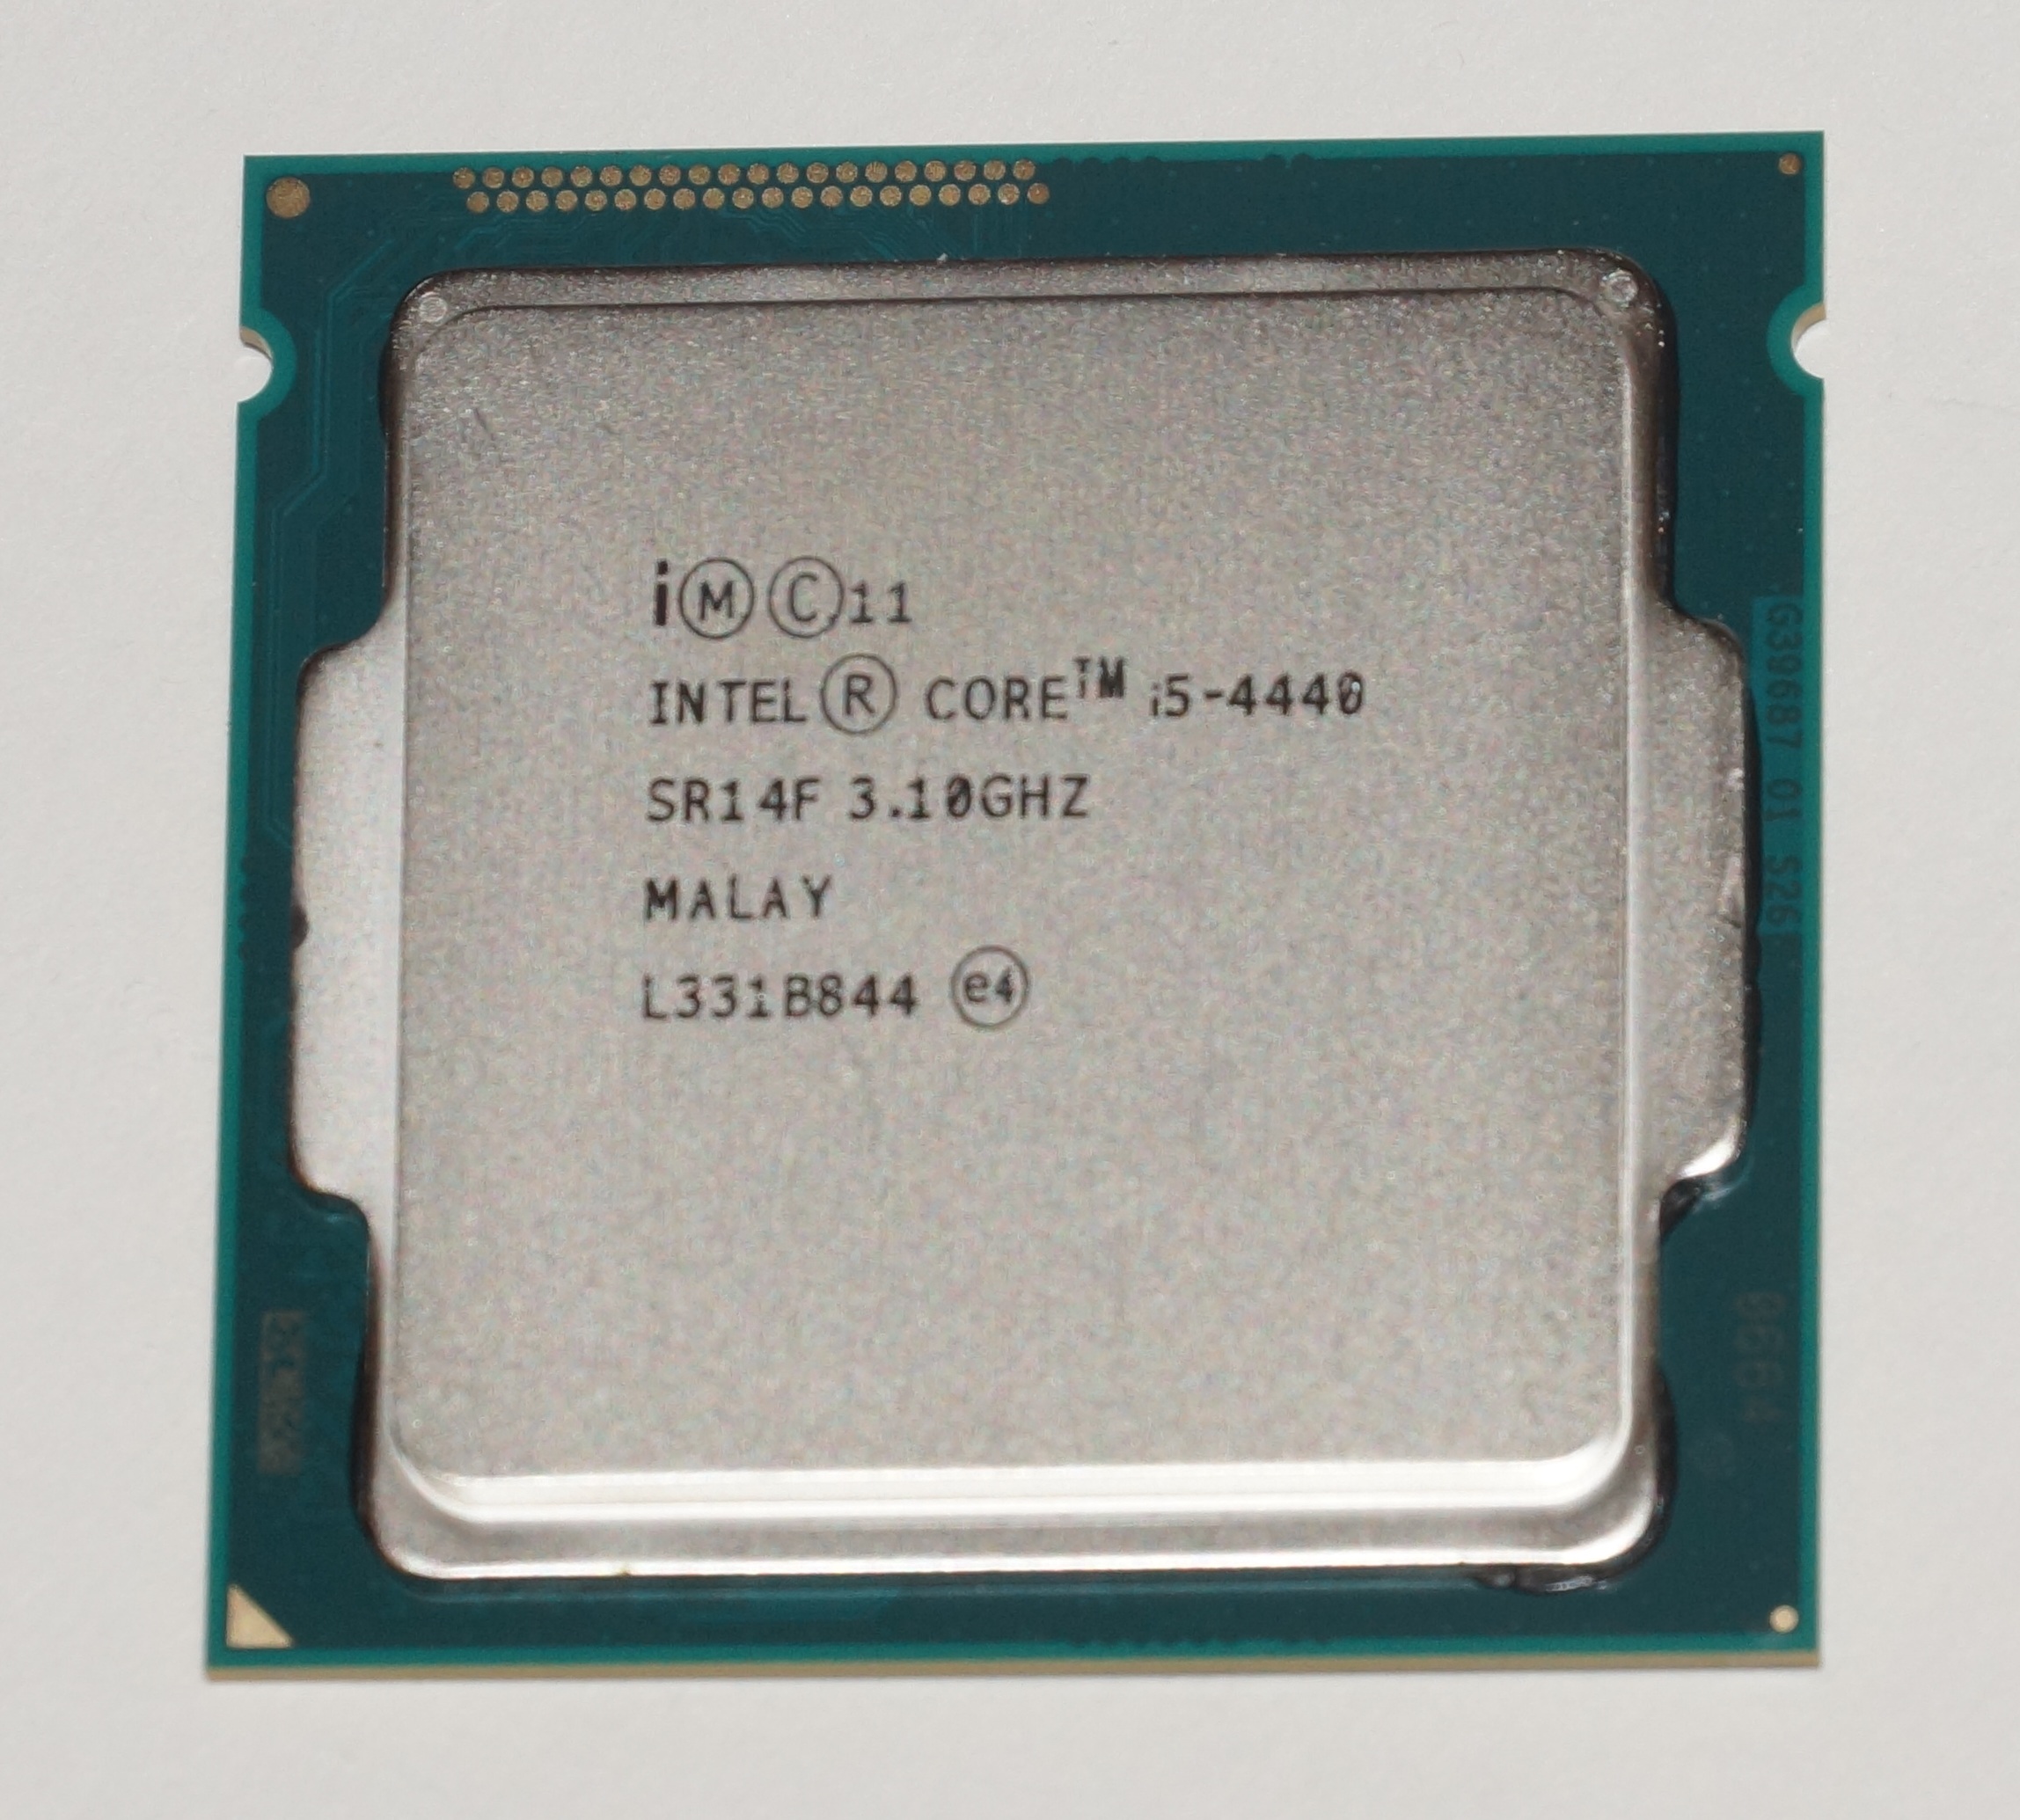 1.3 ггц. Процессор Intel Core i5 4440 s1150. Intel Core i5 4440 3.10GHZ. Intel Core i5-4440 Haswell lga1150, 4 x 3100 МГЦ. Процессор Интел 5 4440.